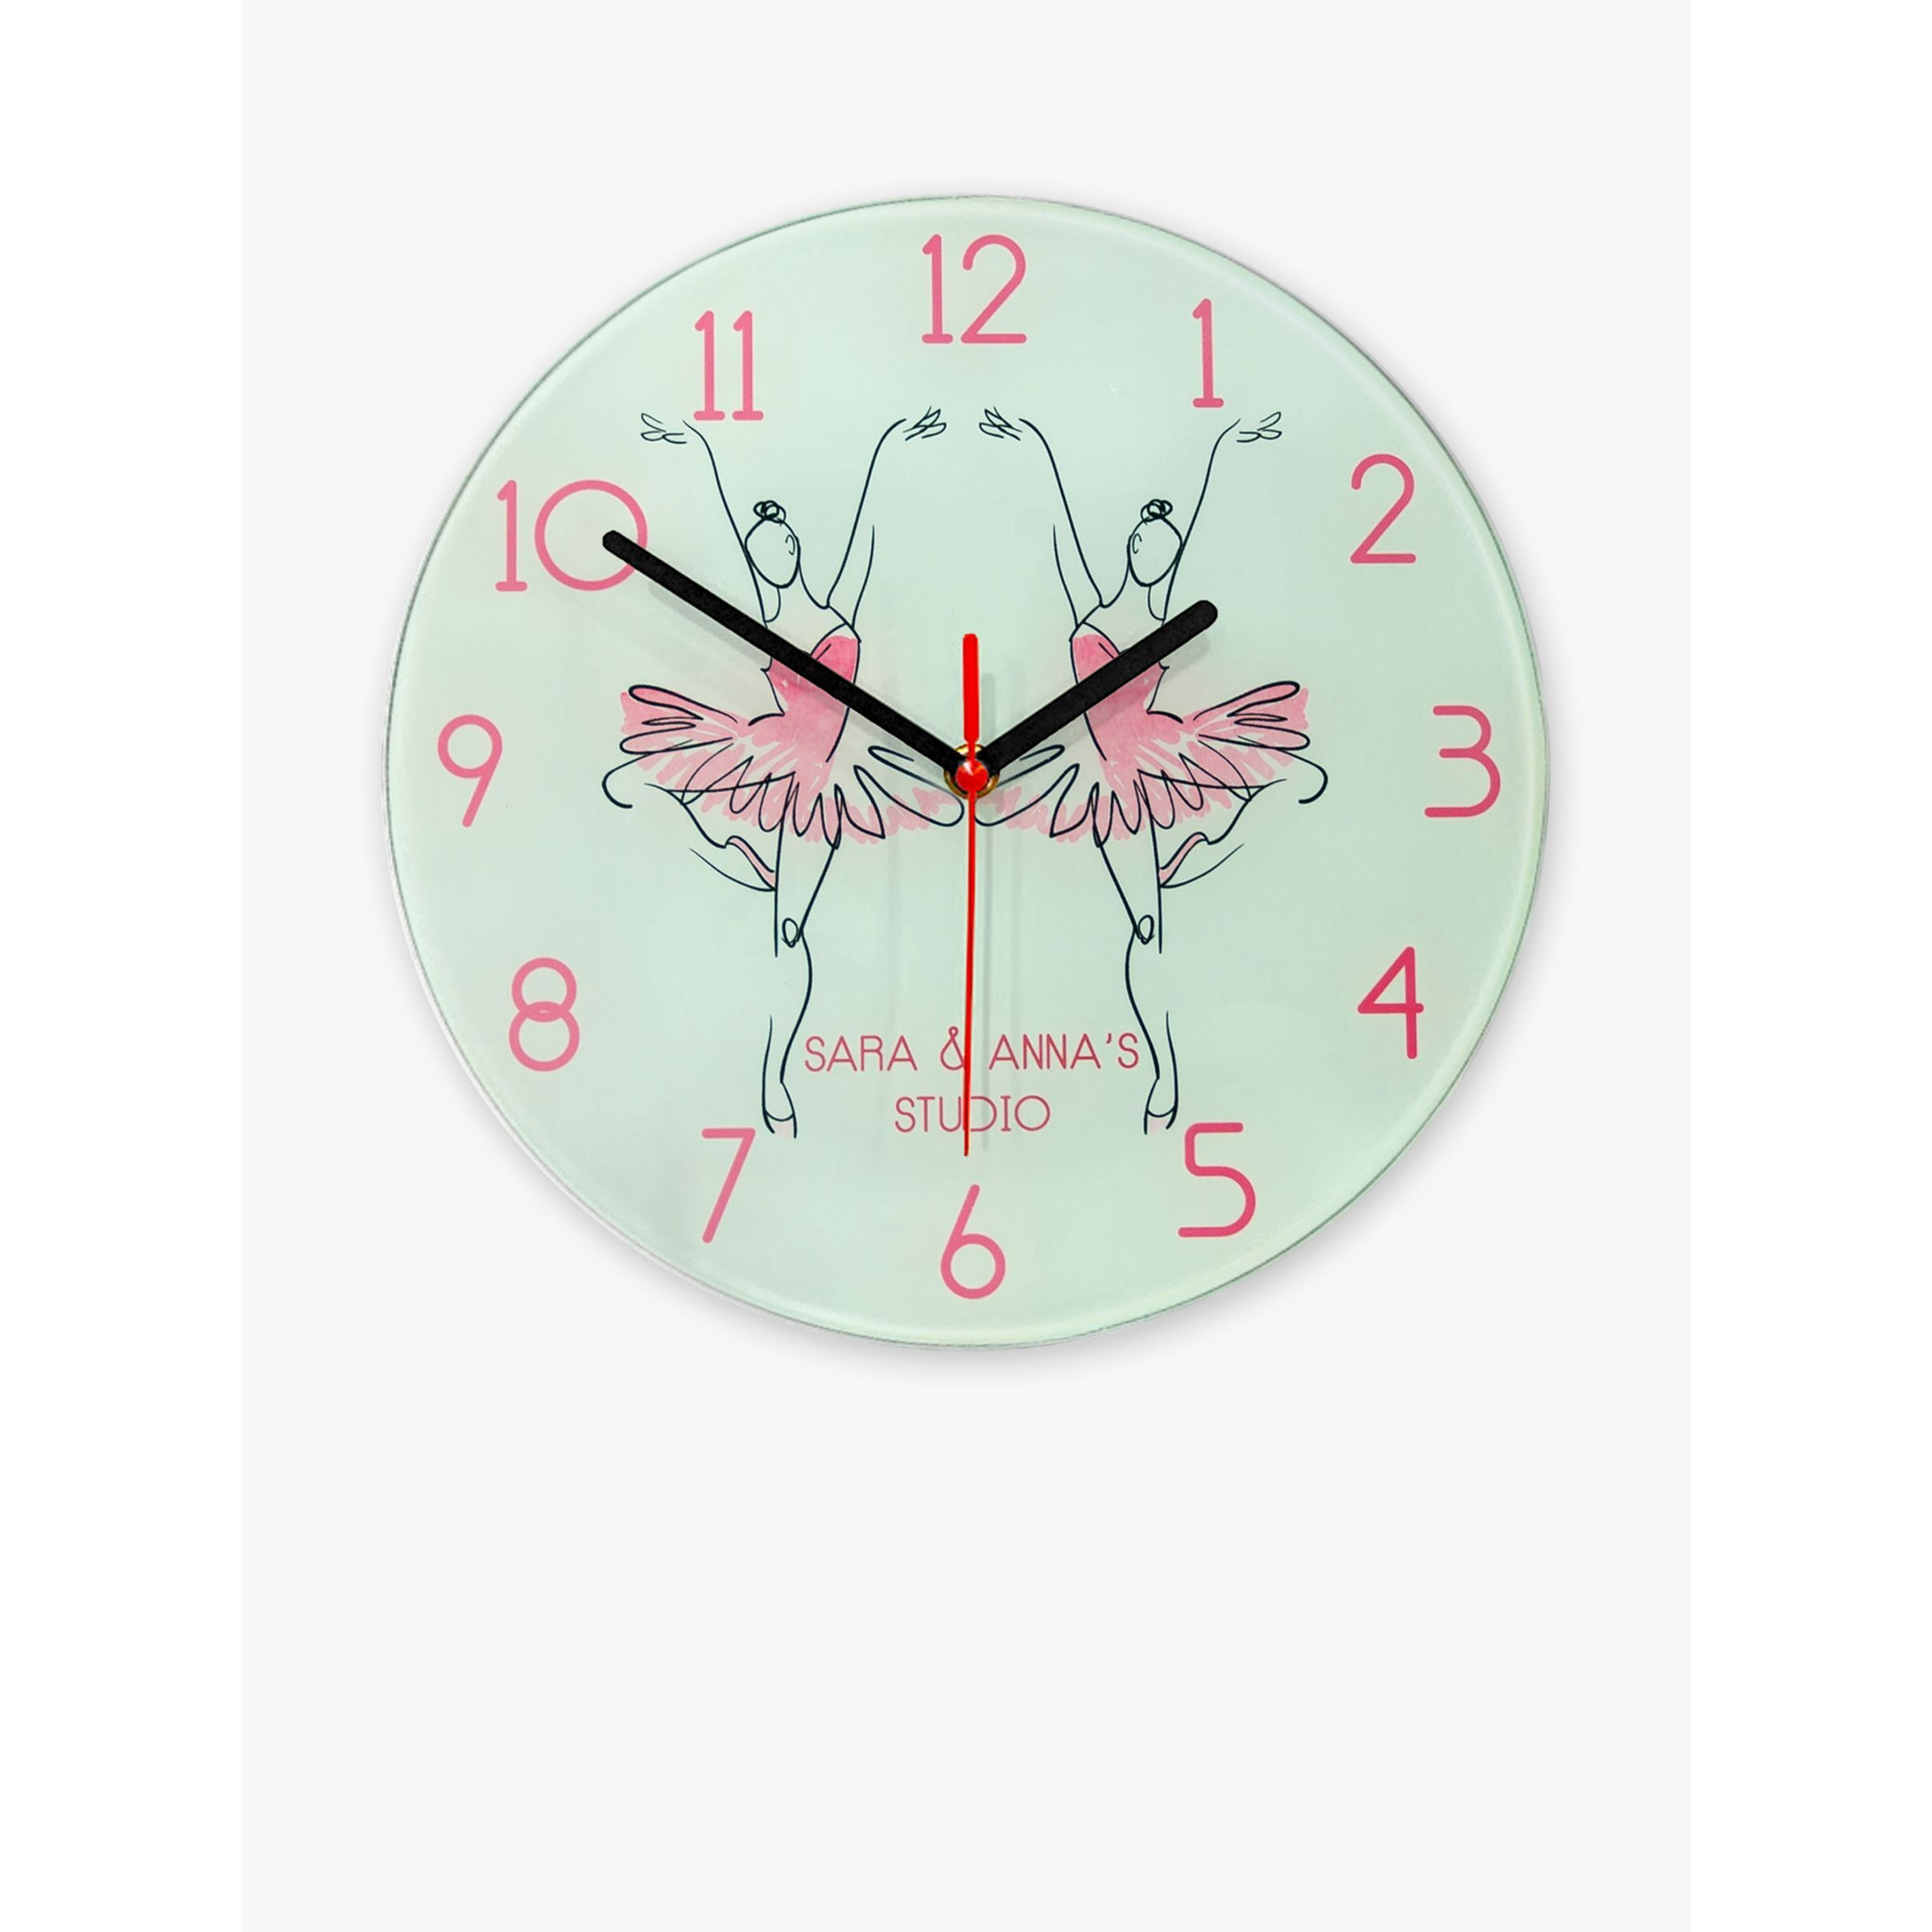 Treat Republic Kids' Personalised Ballet Glass Wall Clock, 20cm, Mint - image 1